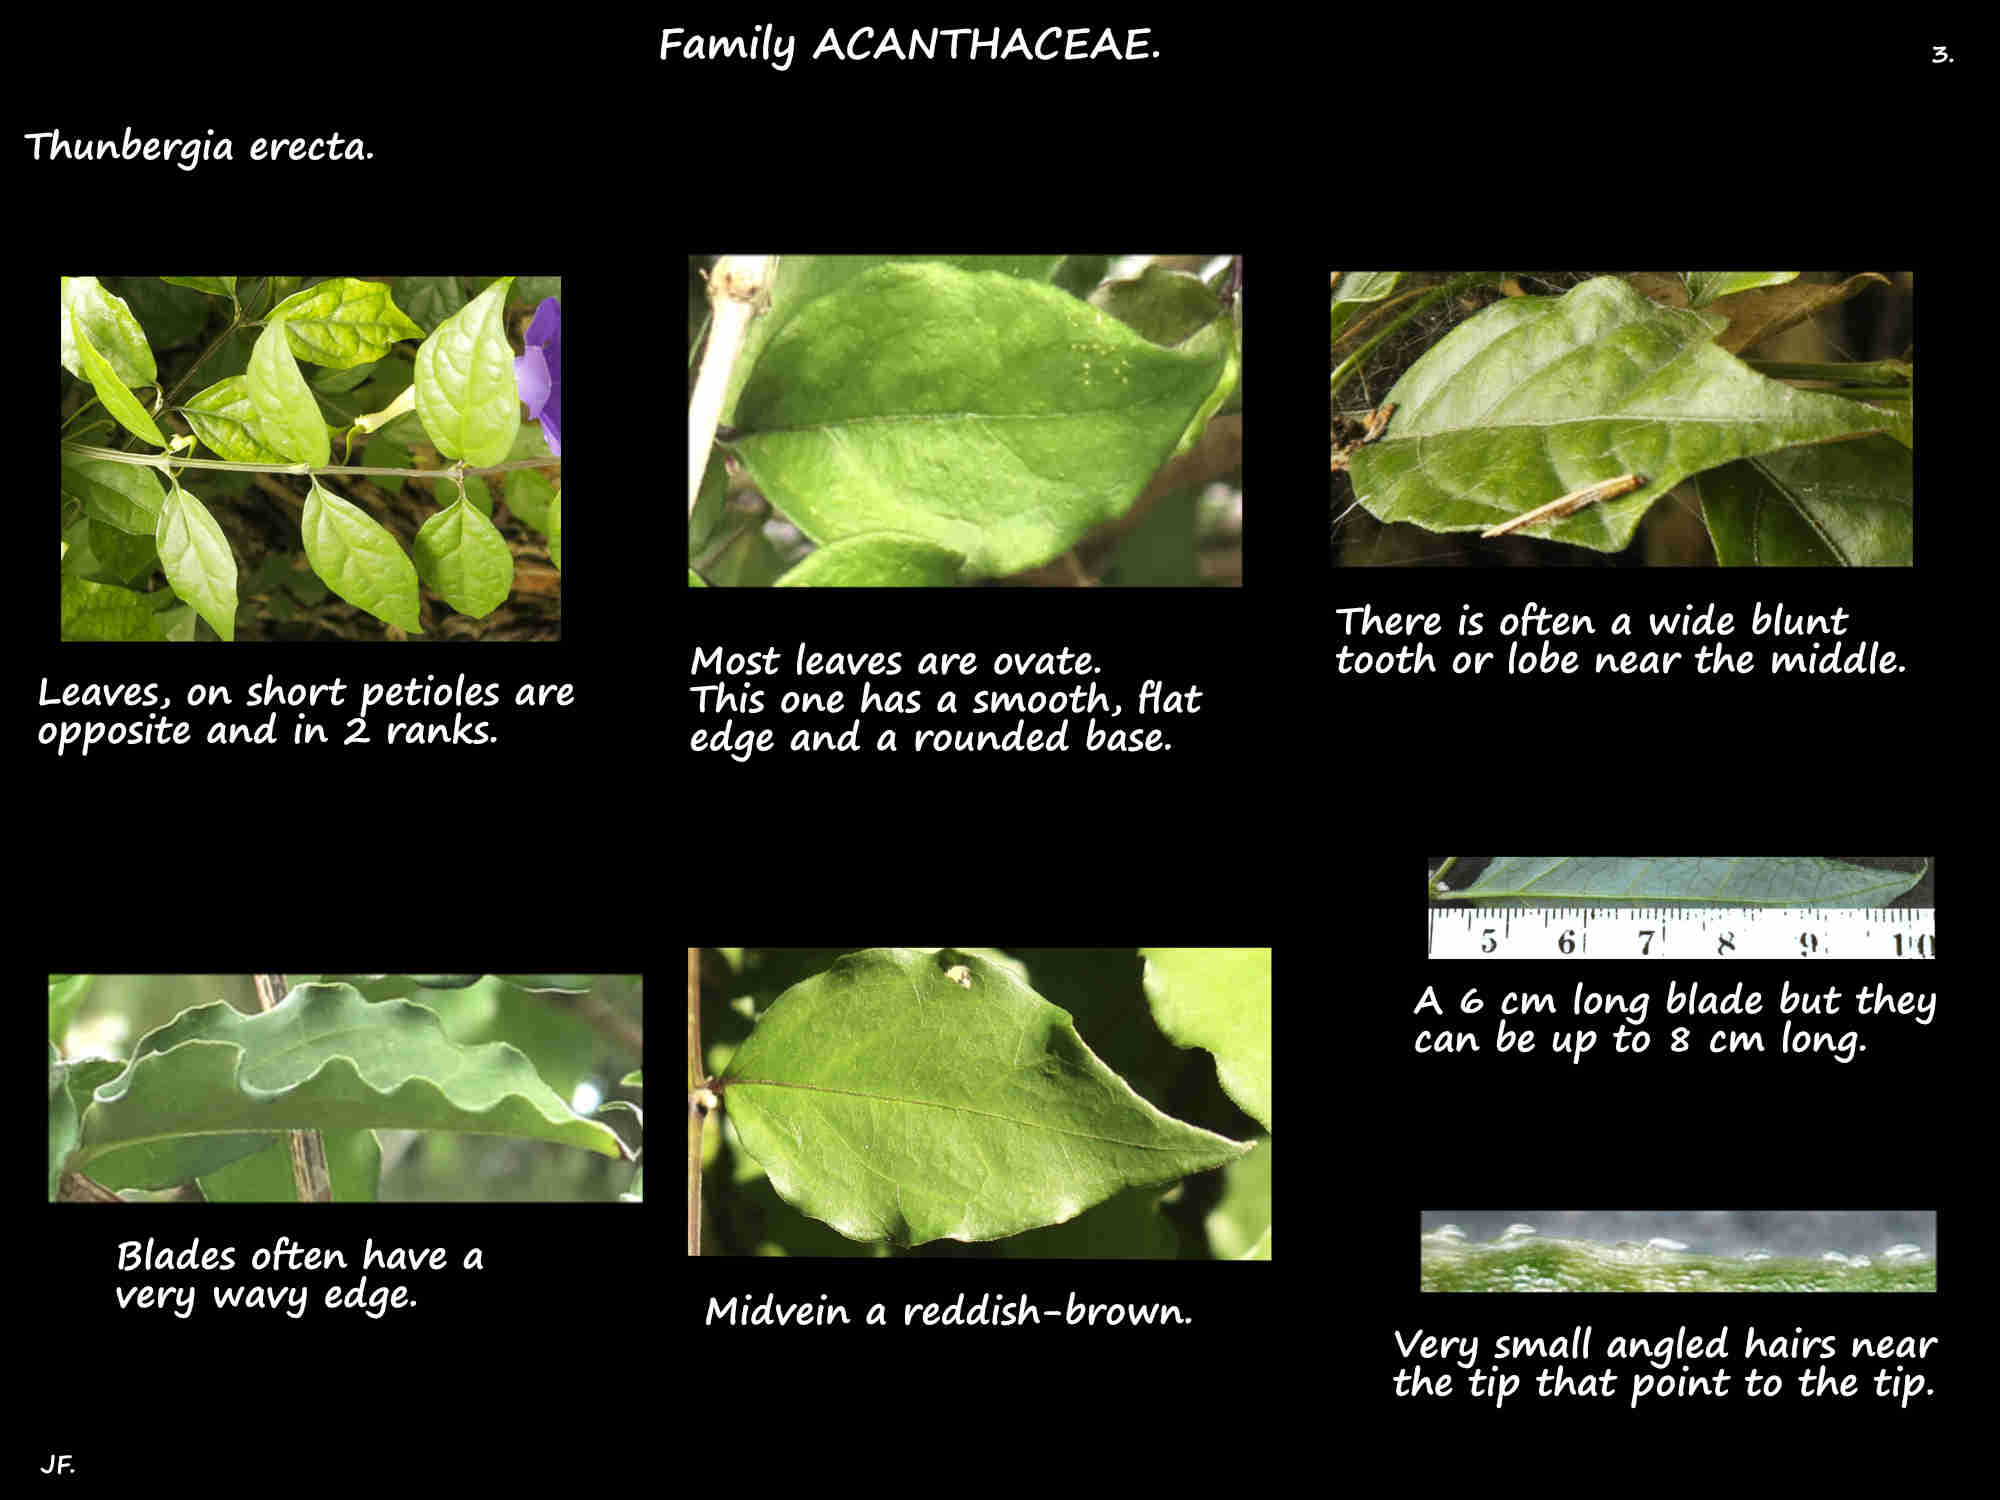 3 Thunbergia erecta leaves